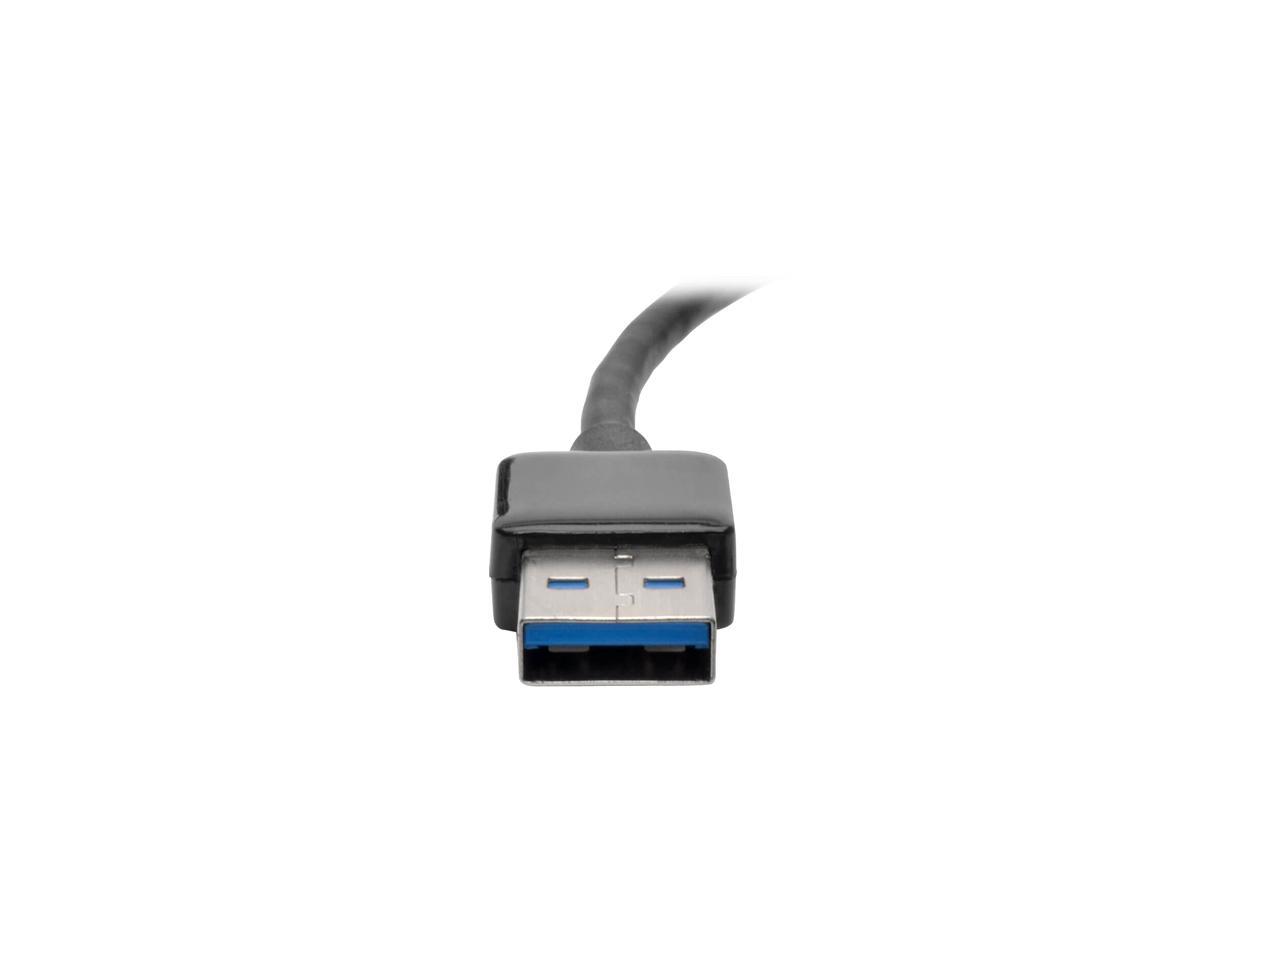 Tripp Lite USB 3.0 SuperSpeed to SATA/IDE Adapter 2.5/3.5/5.25" Hard Drives